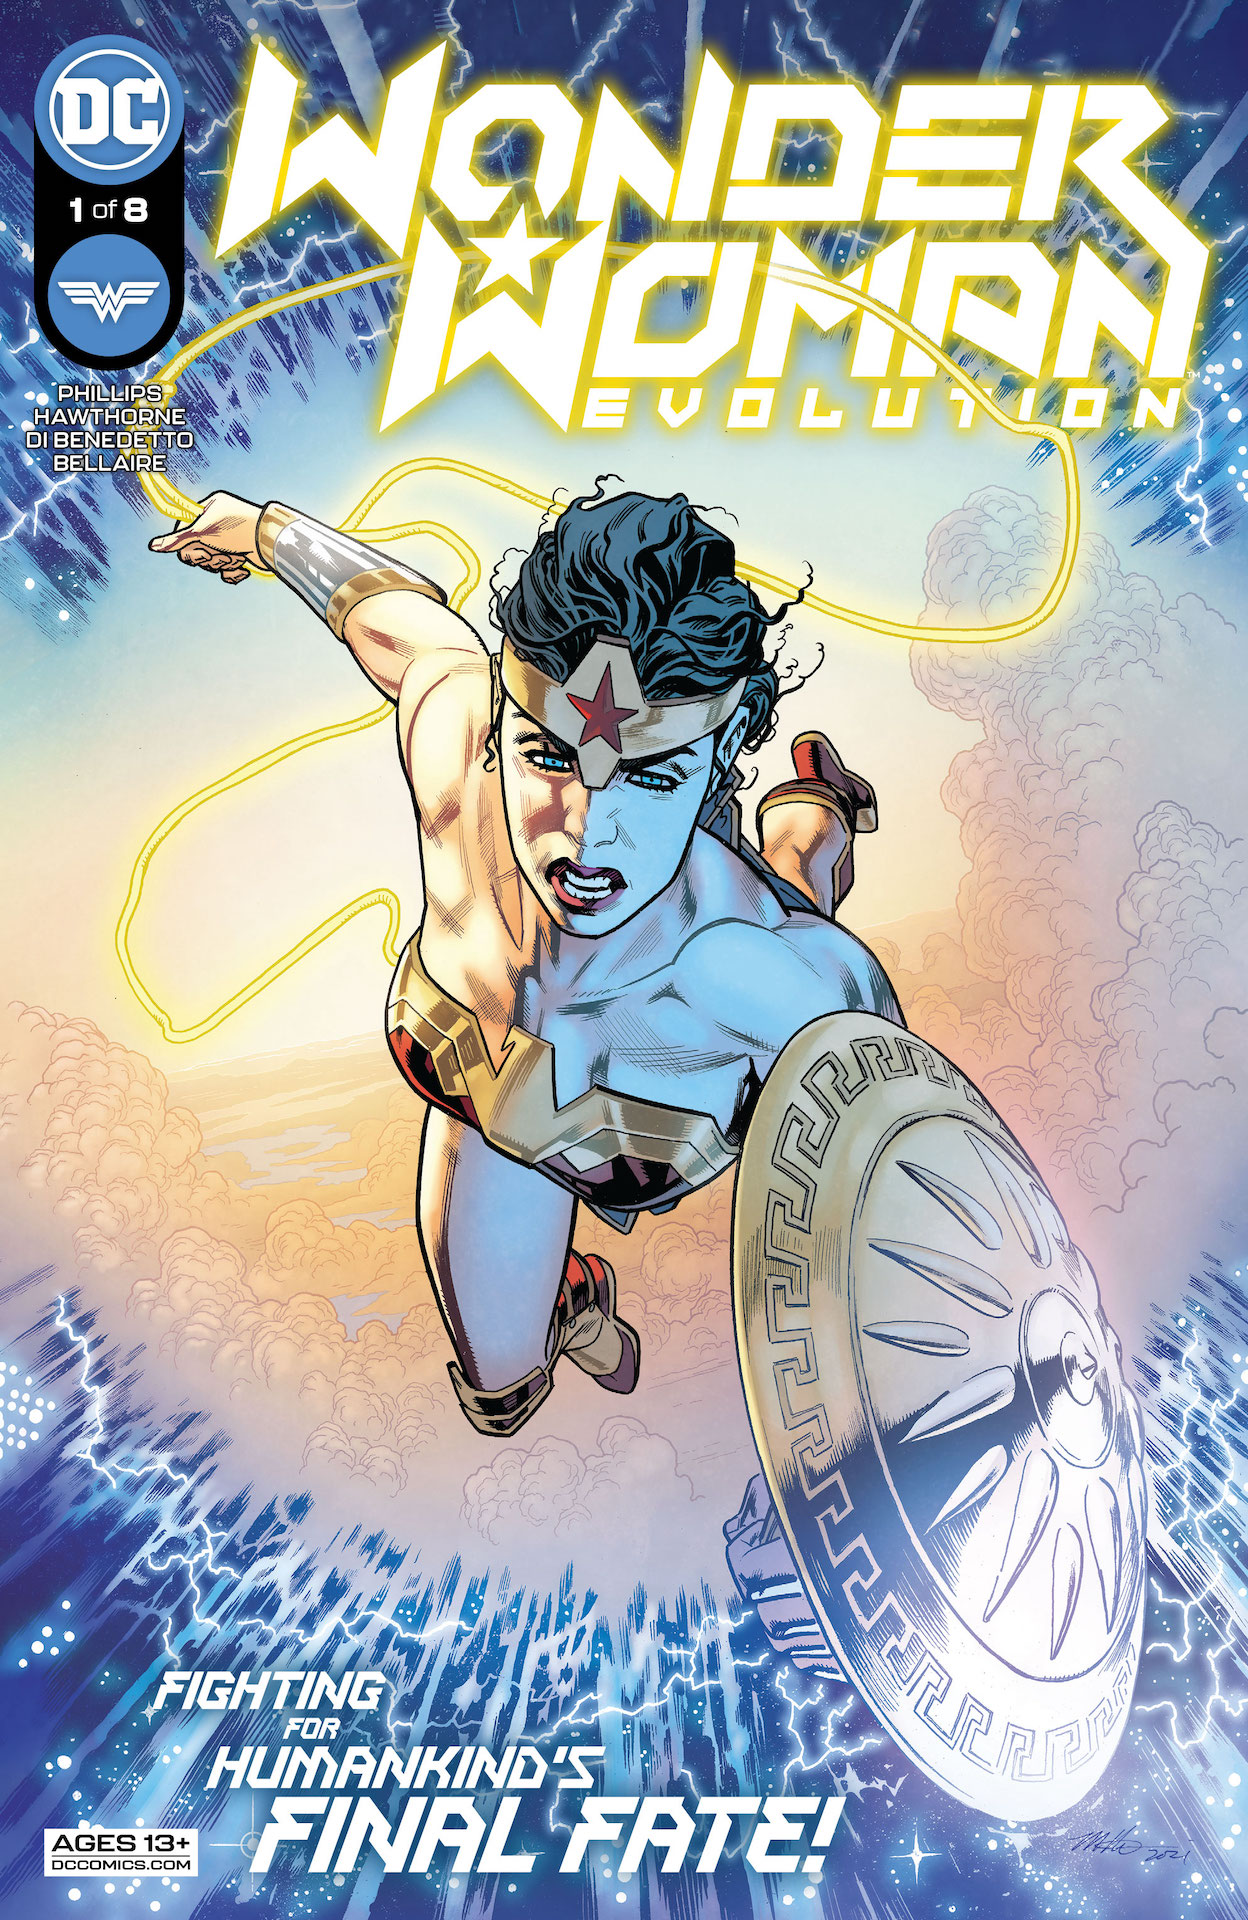 DC Preview: Wonder Woman Evolution #1